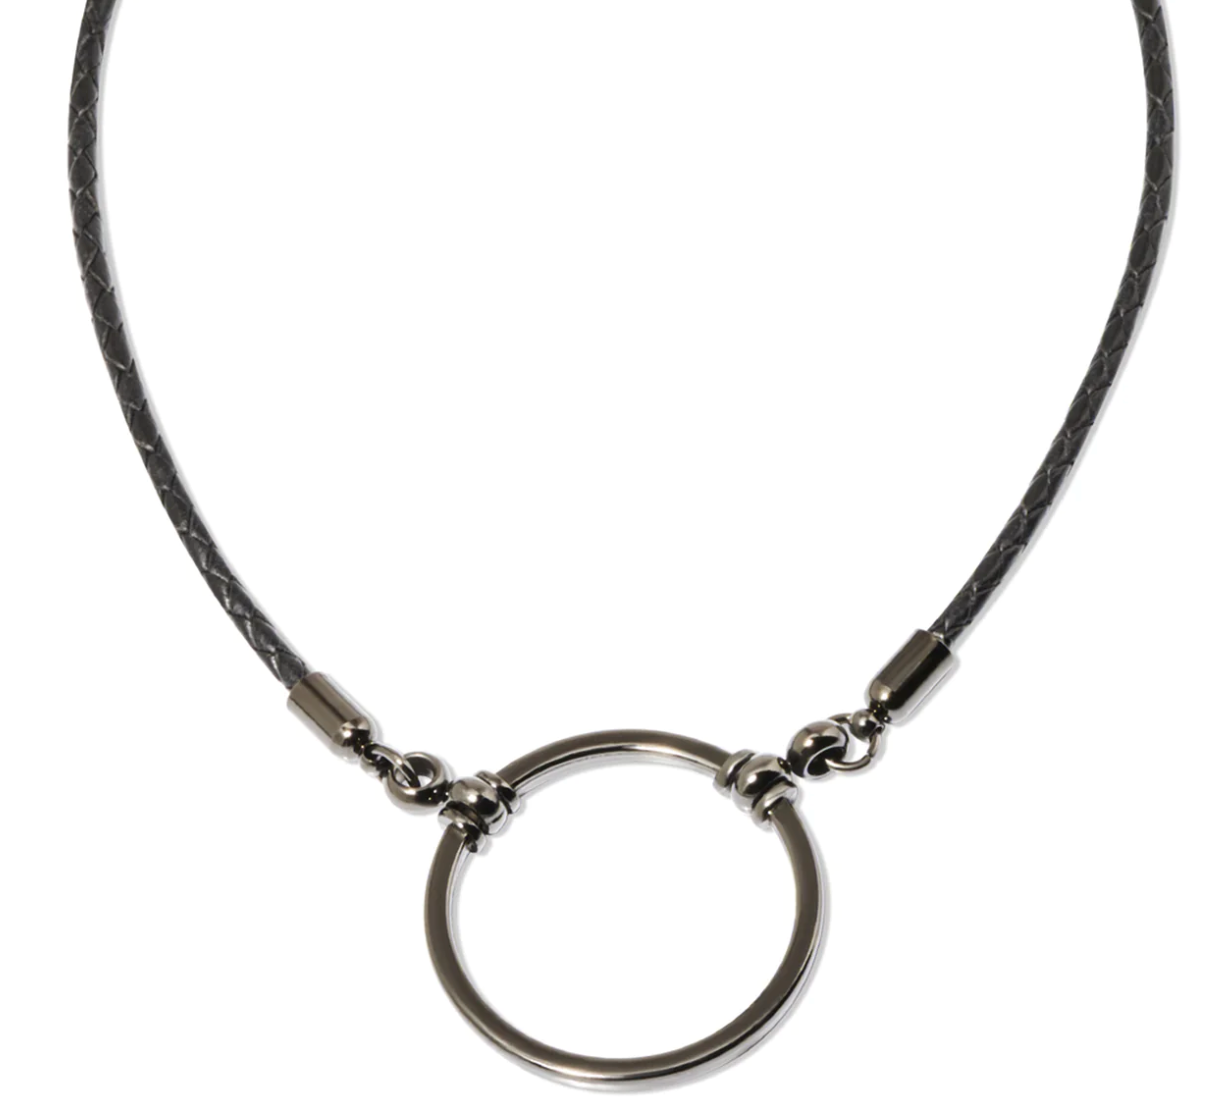 La Loop  eyewear chain   The Morgan Braided